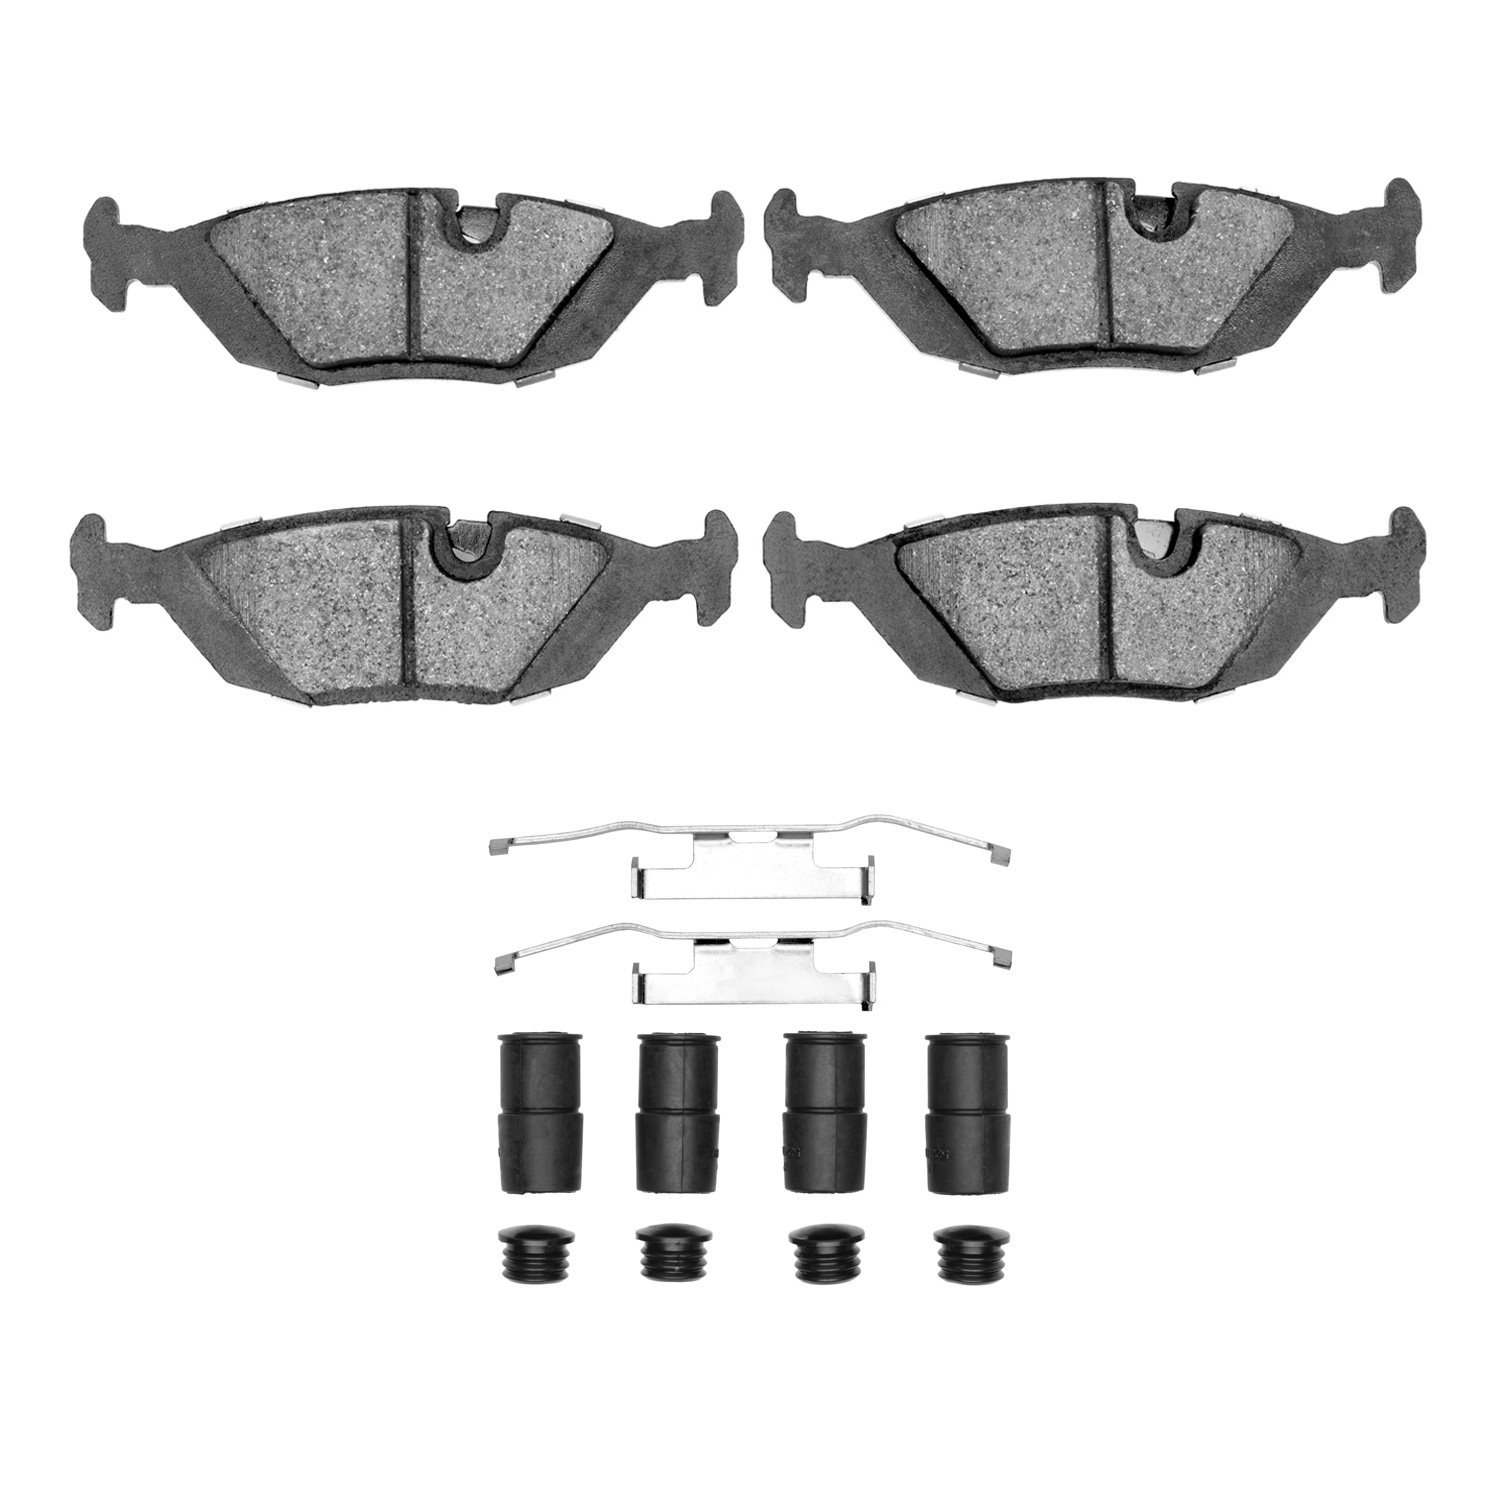 1551-0279-01 5000 Advanced Low-Metallic Brake Pads & Hardware Kit, 1981-1991 BMW, Position: Rear